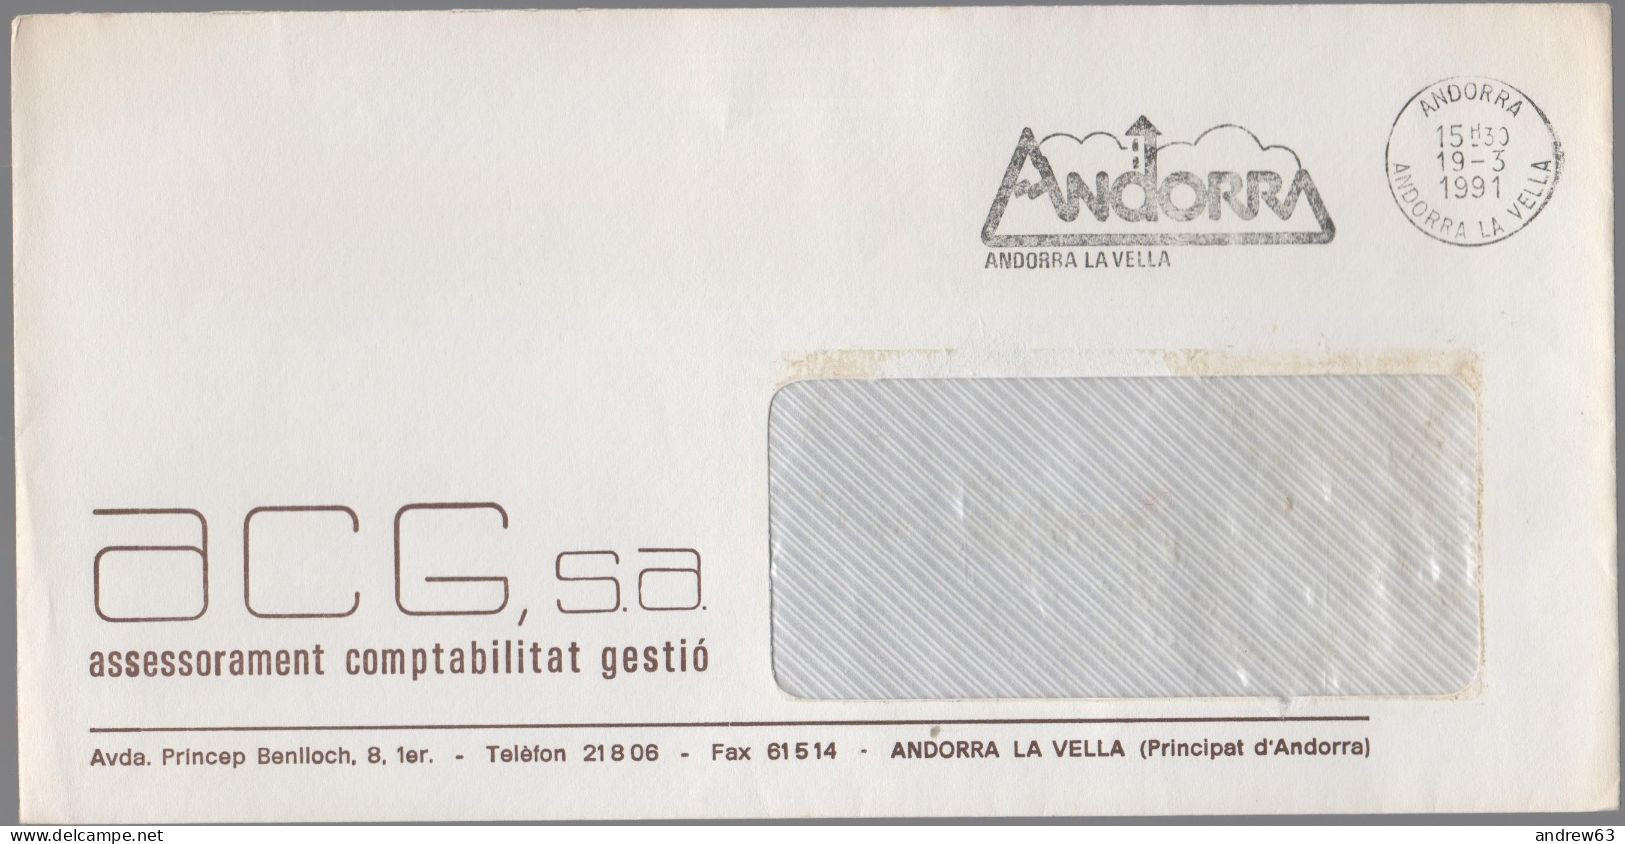 ANDORRA - ANDORRE - 1991 - Lettre En Franchise + Flamme - ACG, S.a. - Viaggiata Da Andorra La Vella - Storia Postale